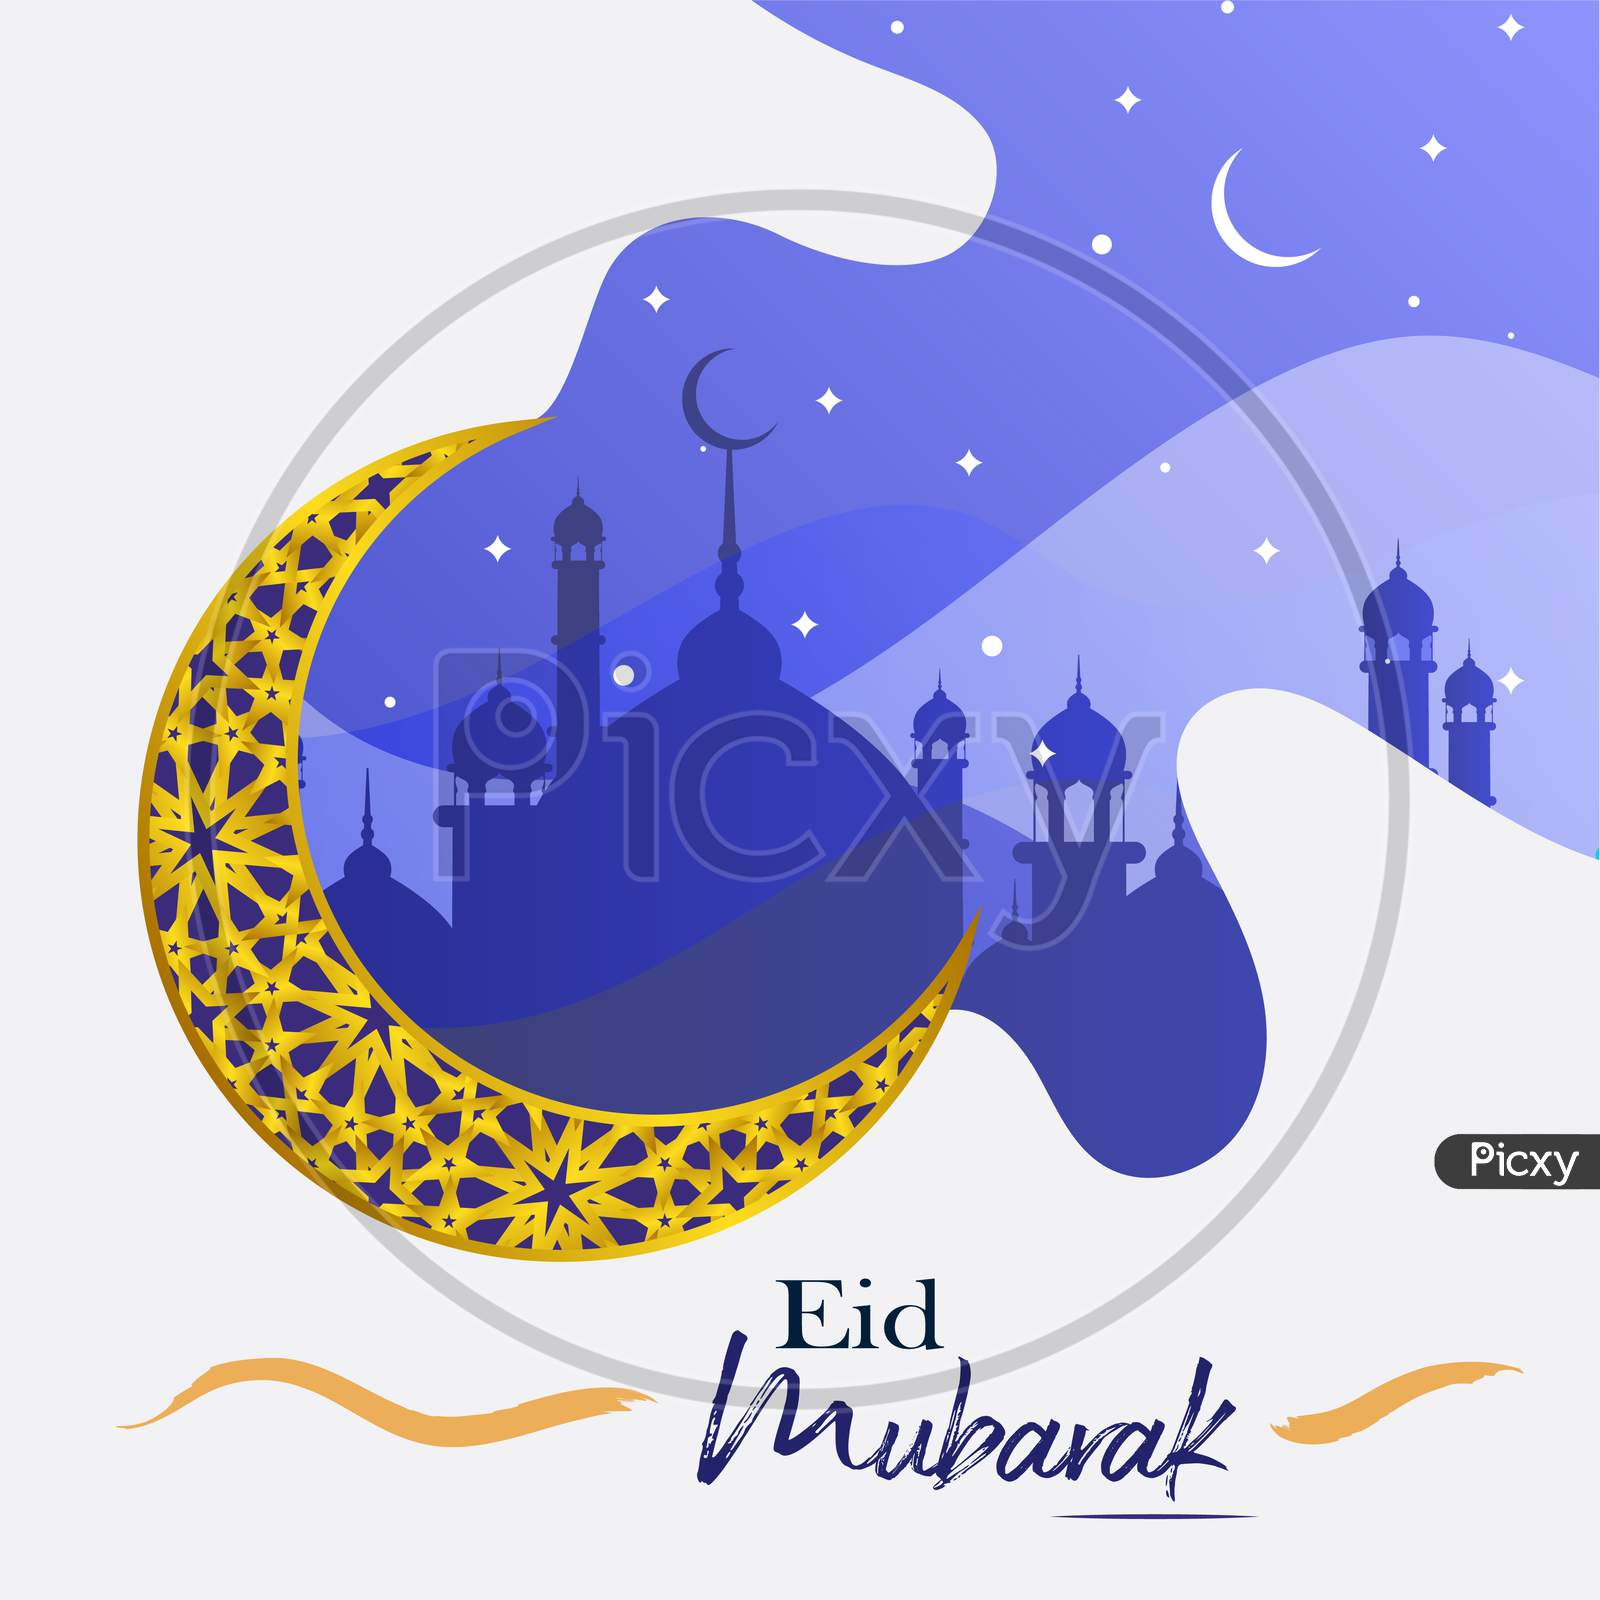 Eid Mubarak Greeting Poster, Card With Paint Brush Effect, Flat Illustration, Vector